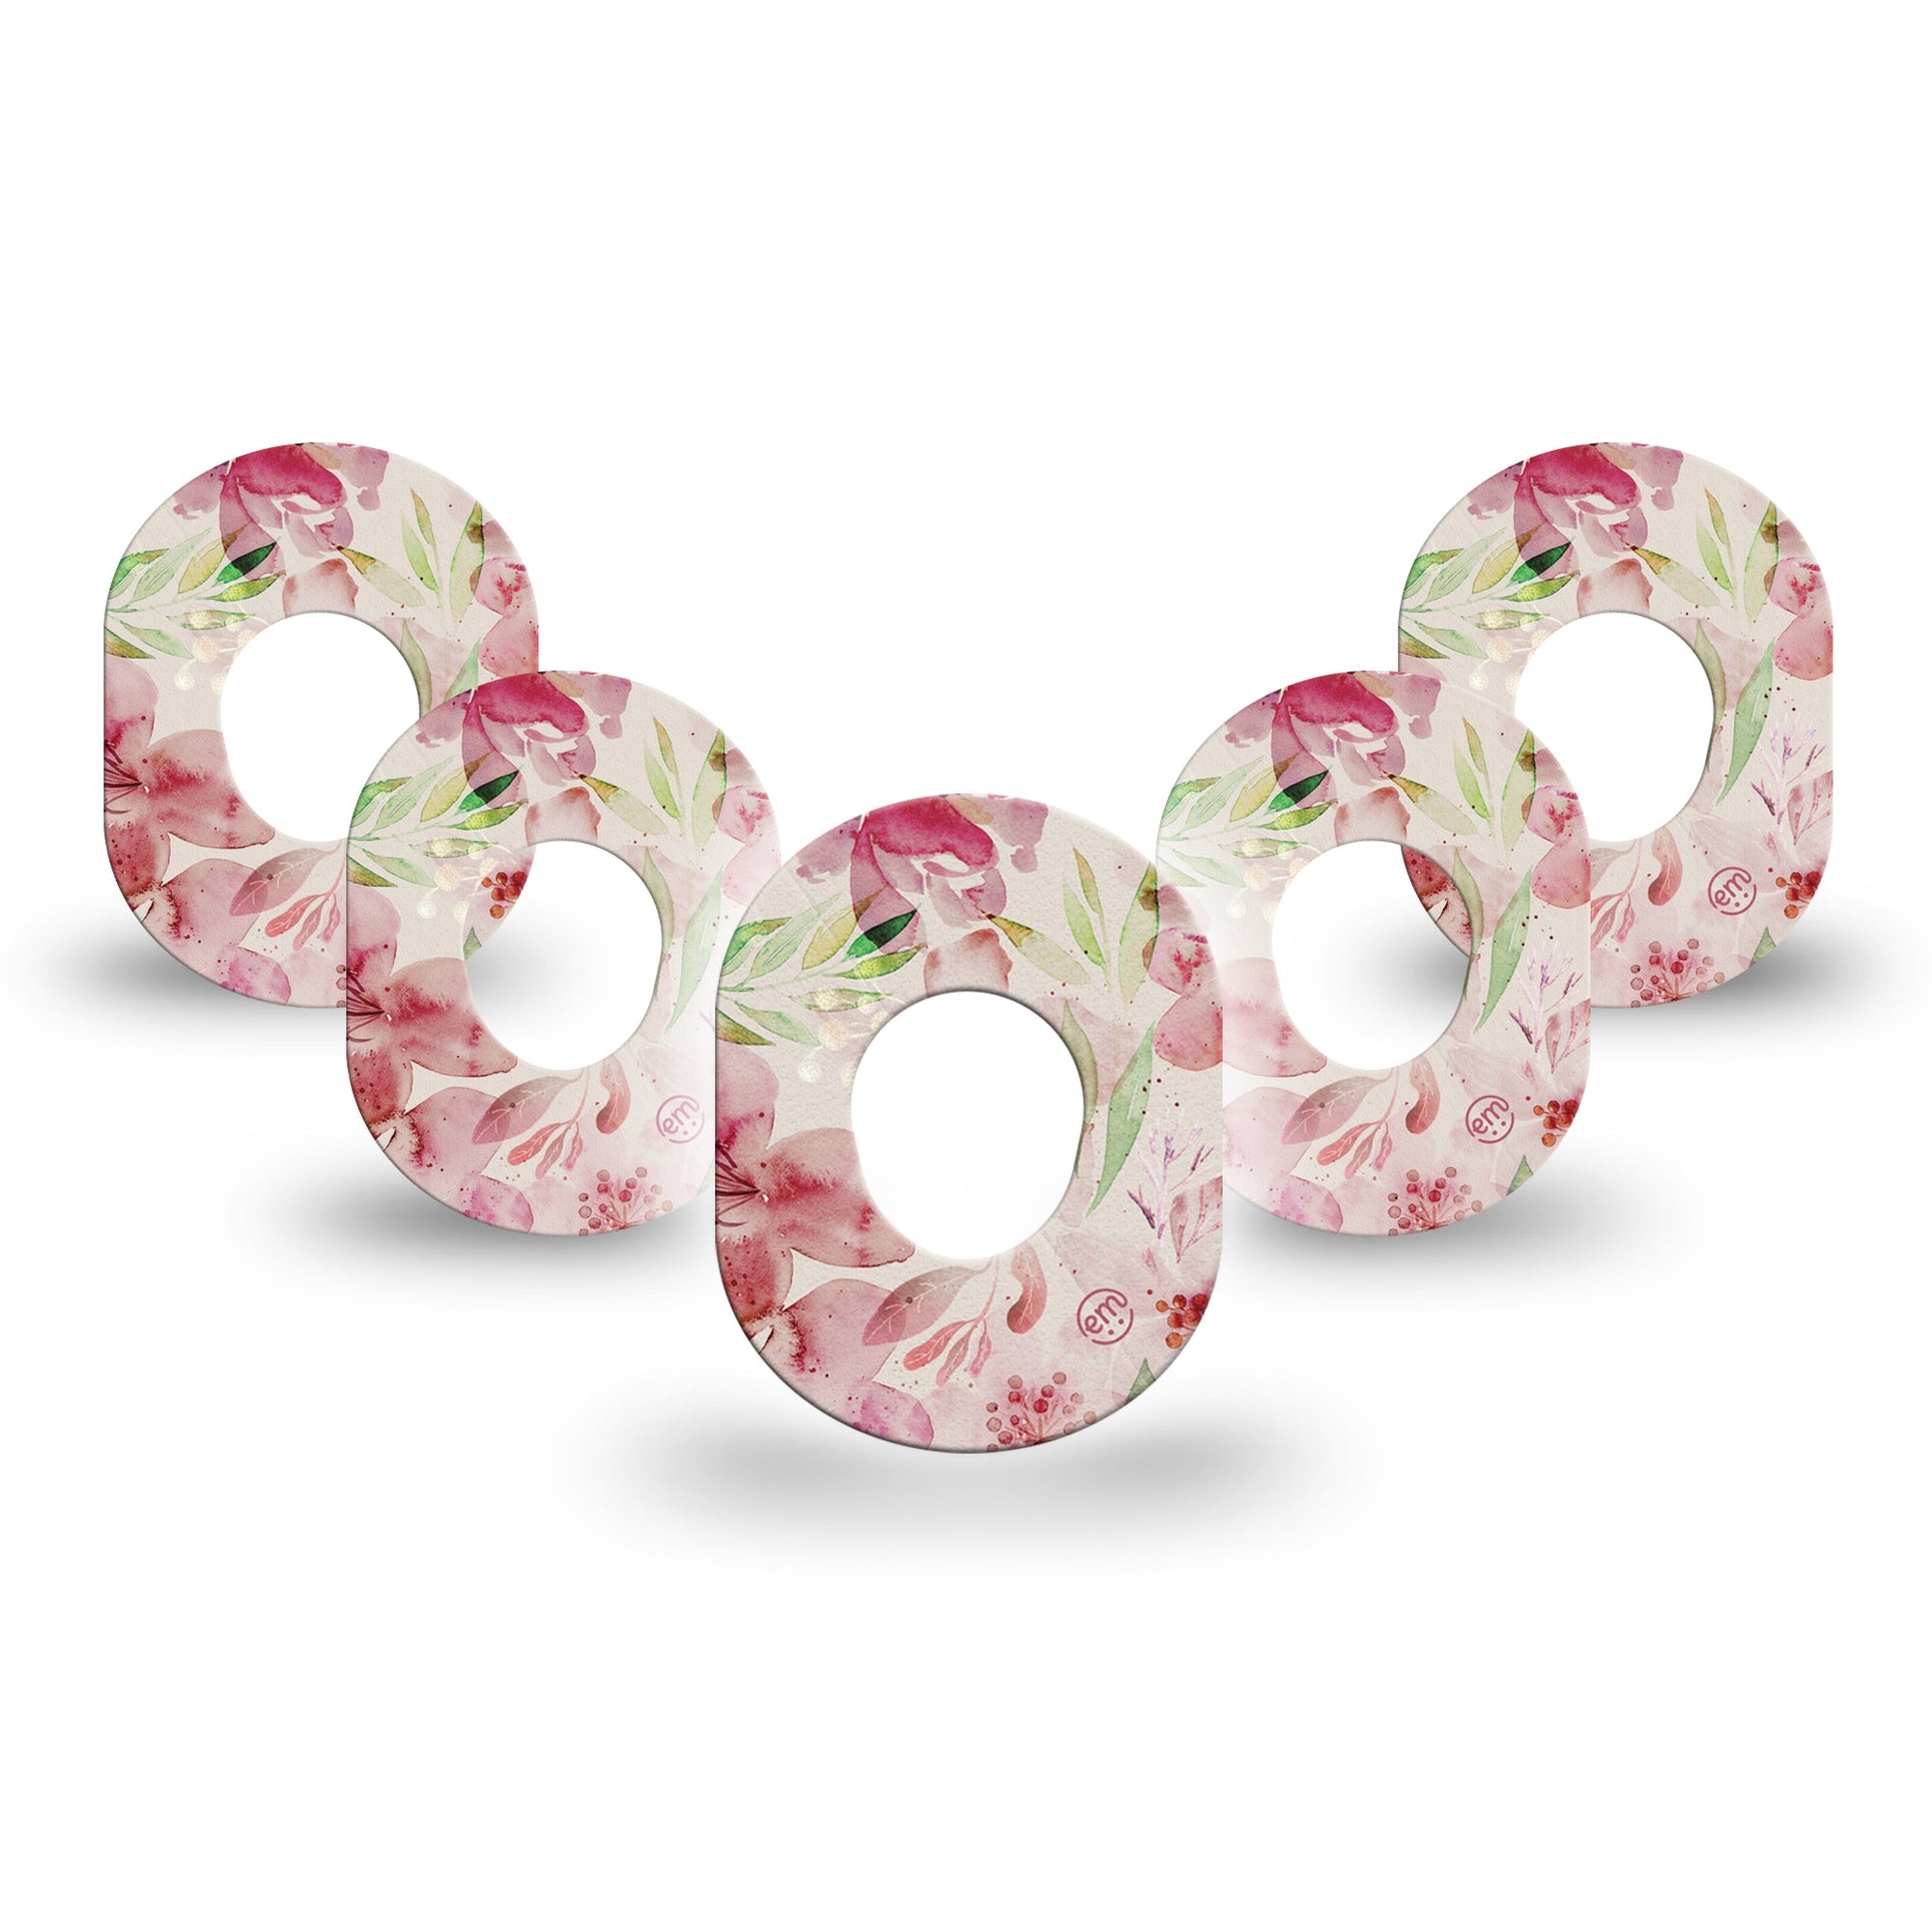 ExpressionMed Ethereal Spring Dexcom G7 Mini Tape, 5-Pack, pink floral plaster design